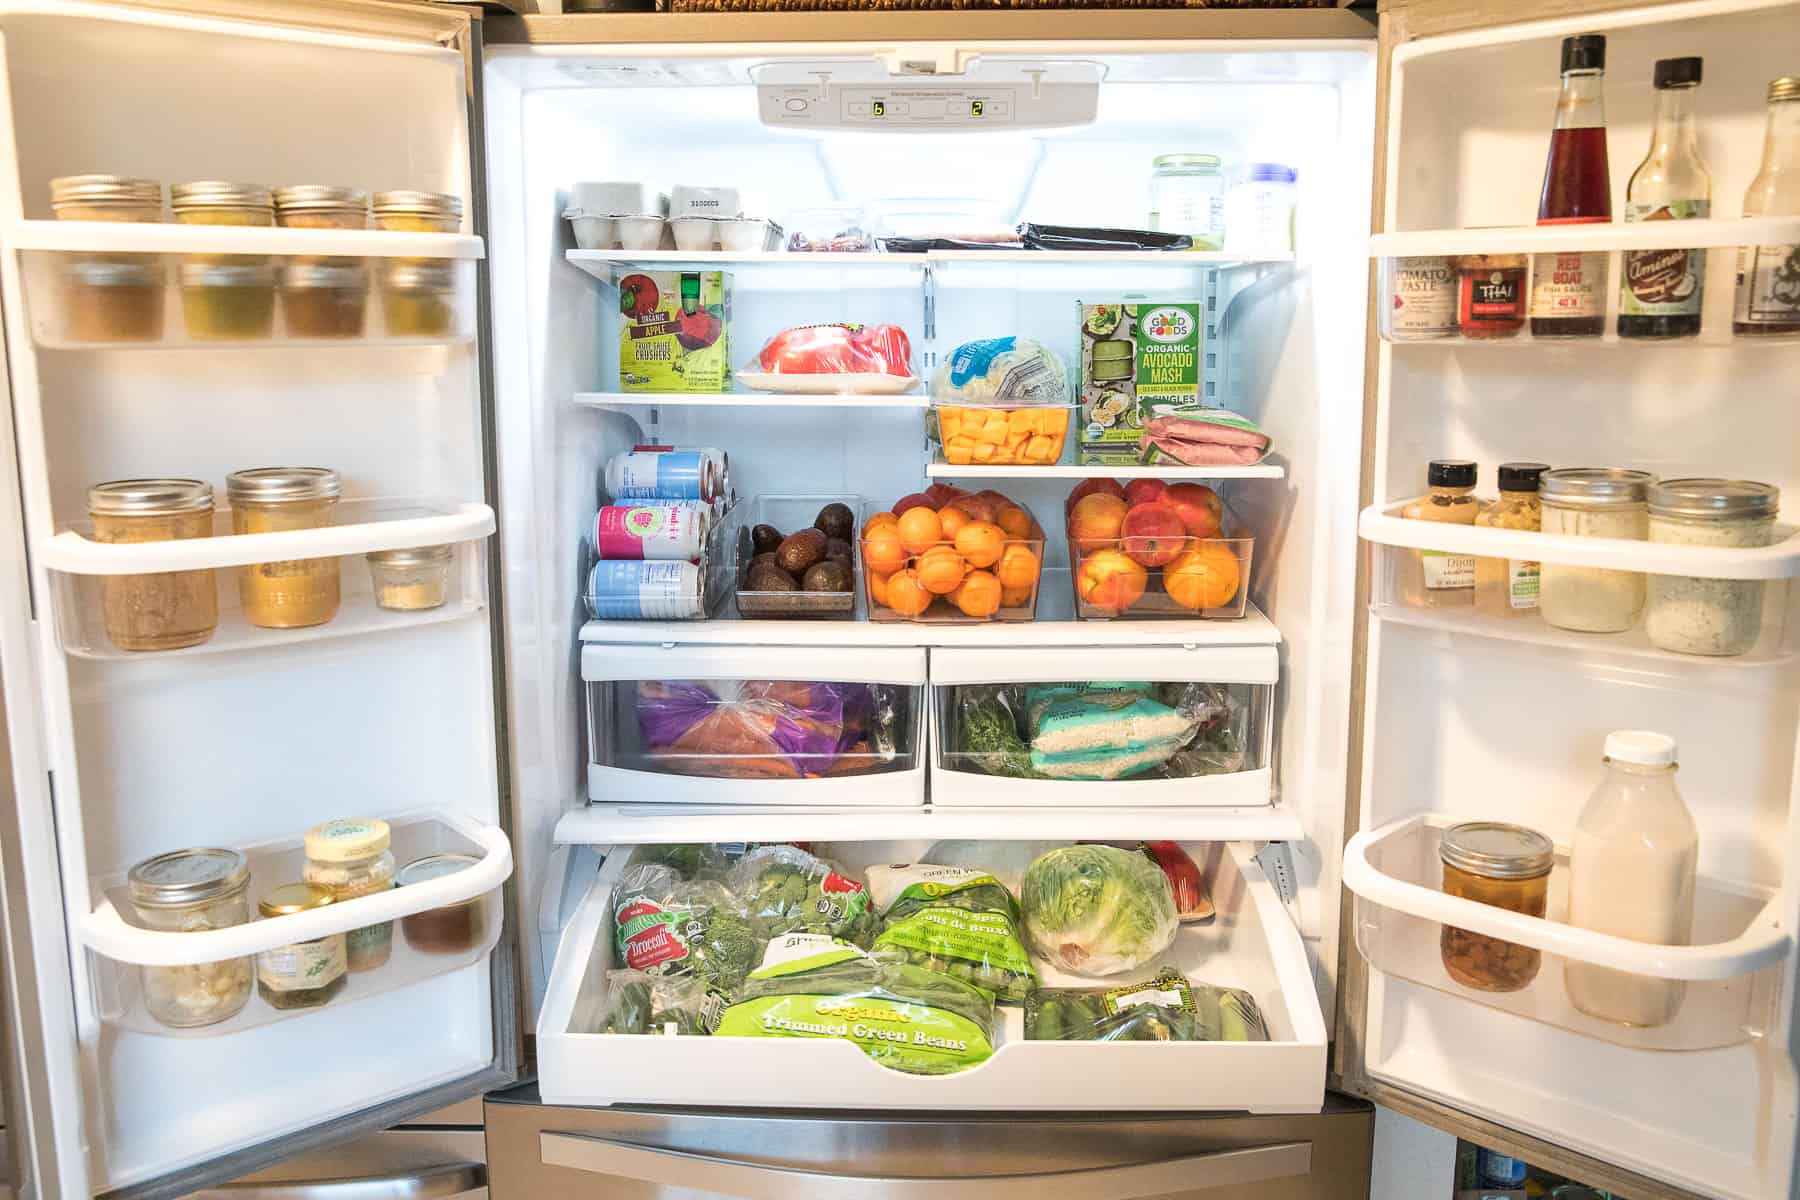 A whole30 stocked refrigerator